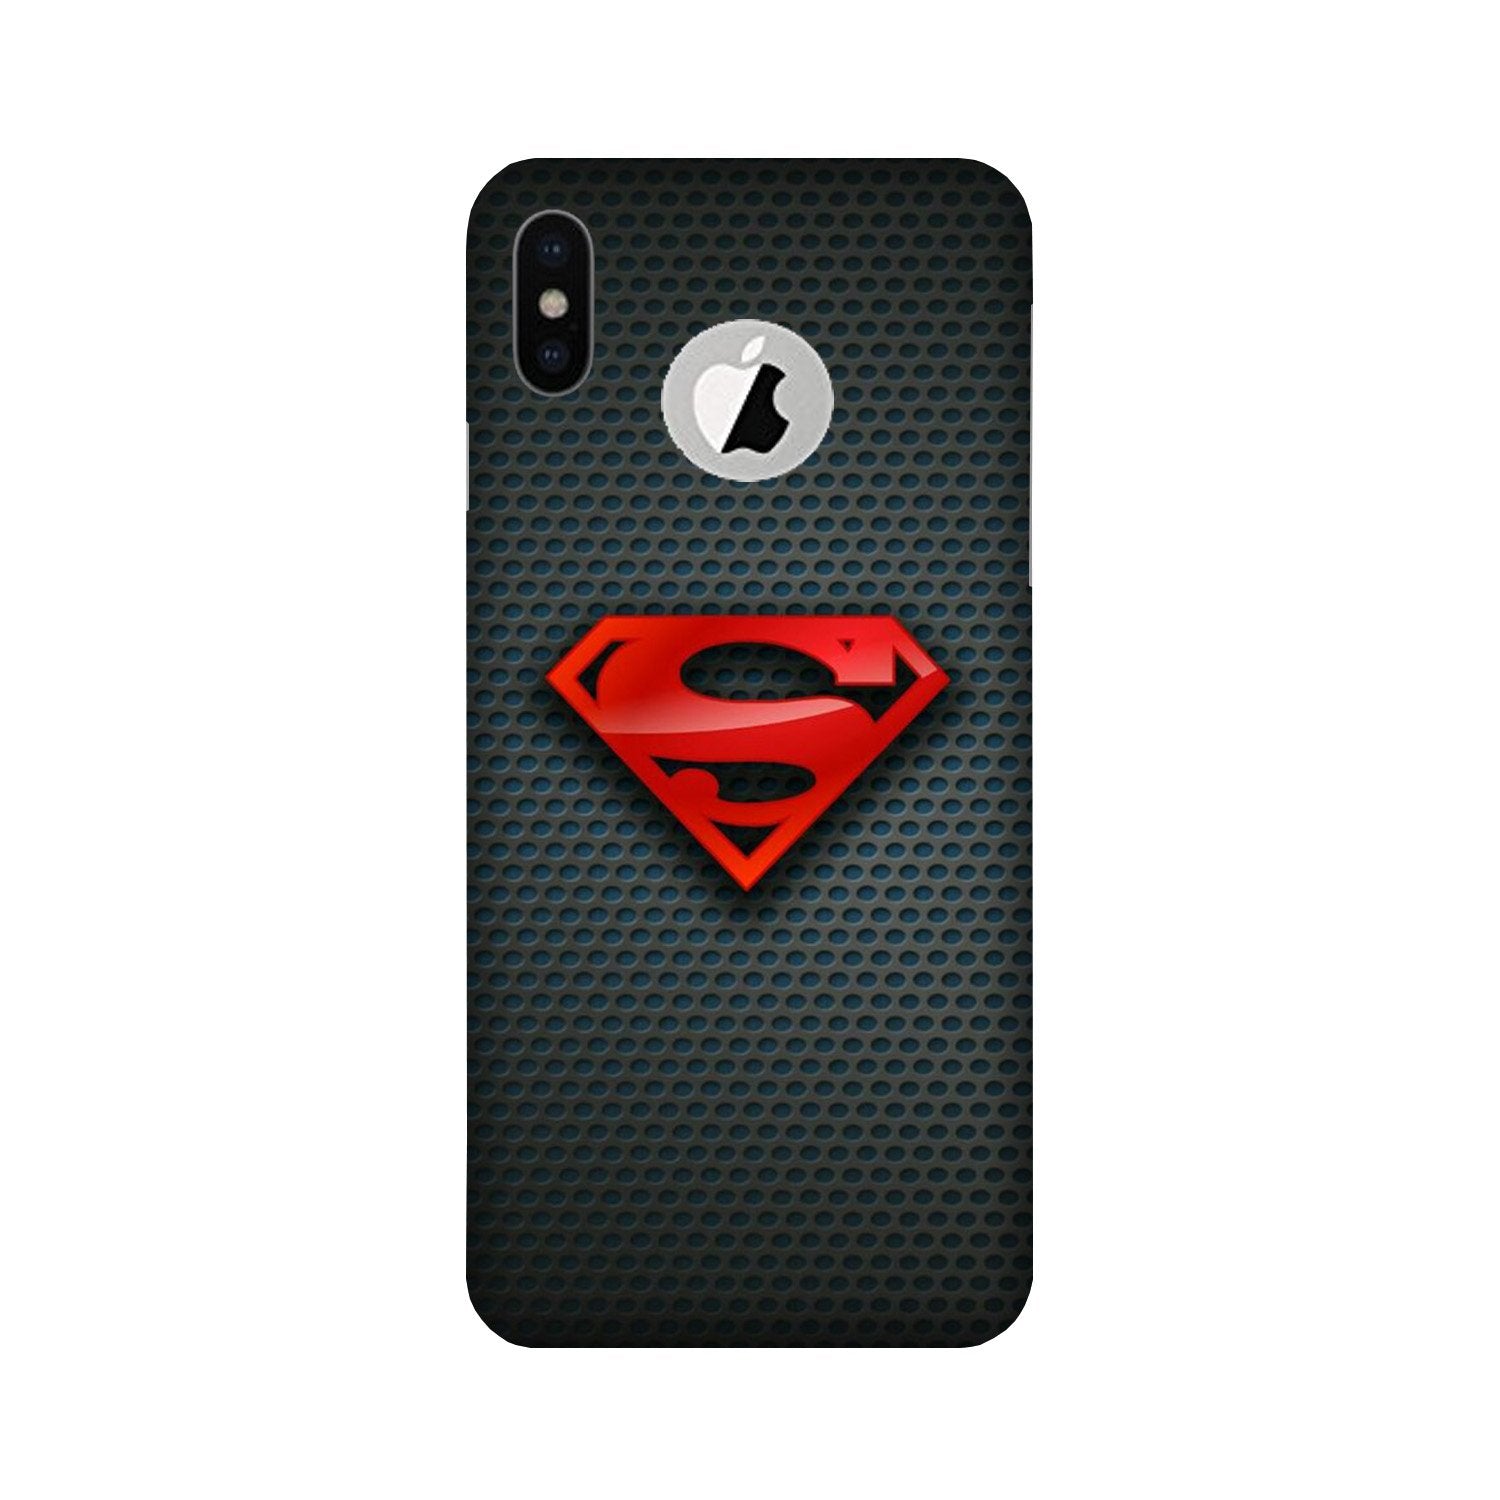 Superman Case for iPhone X logo cut (Design No. 247)